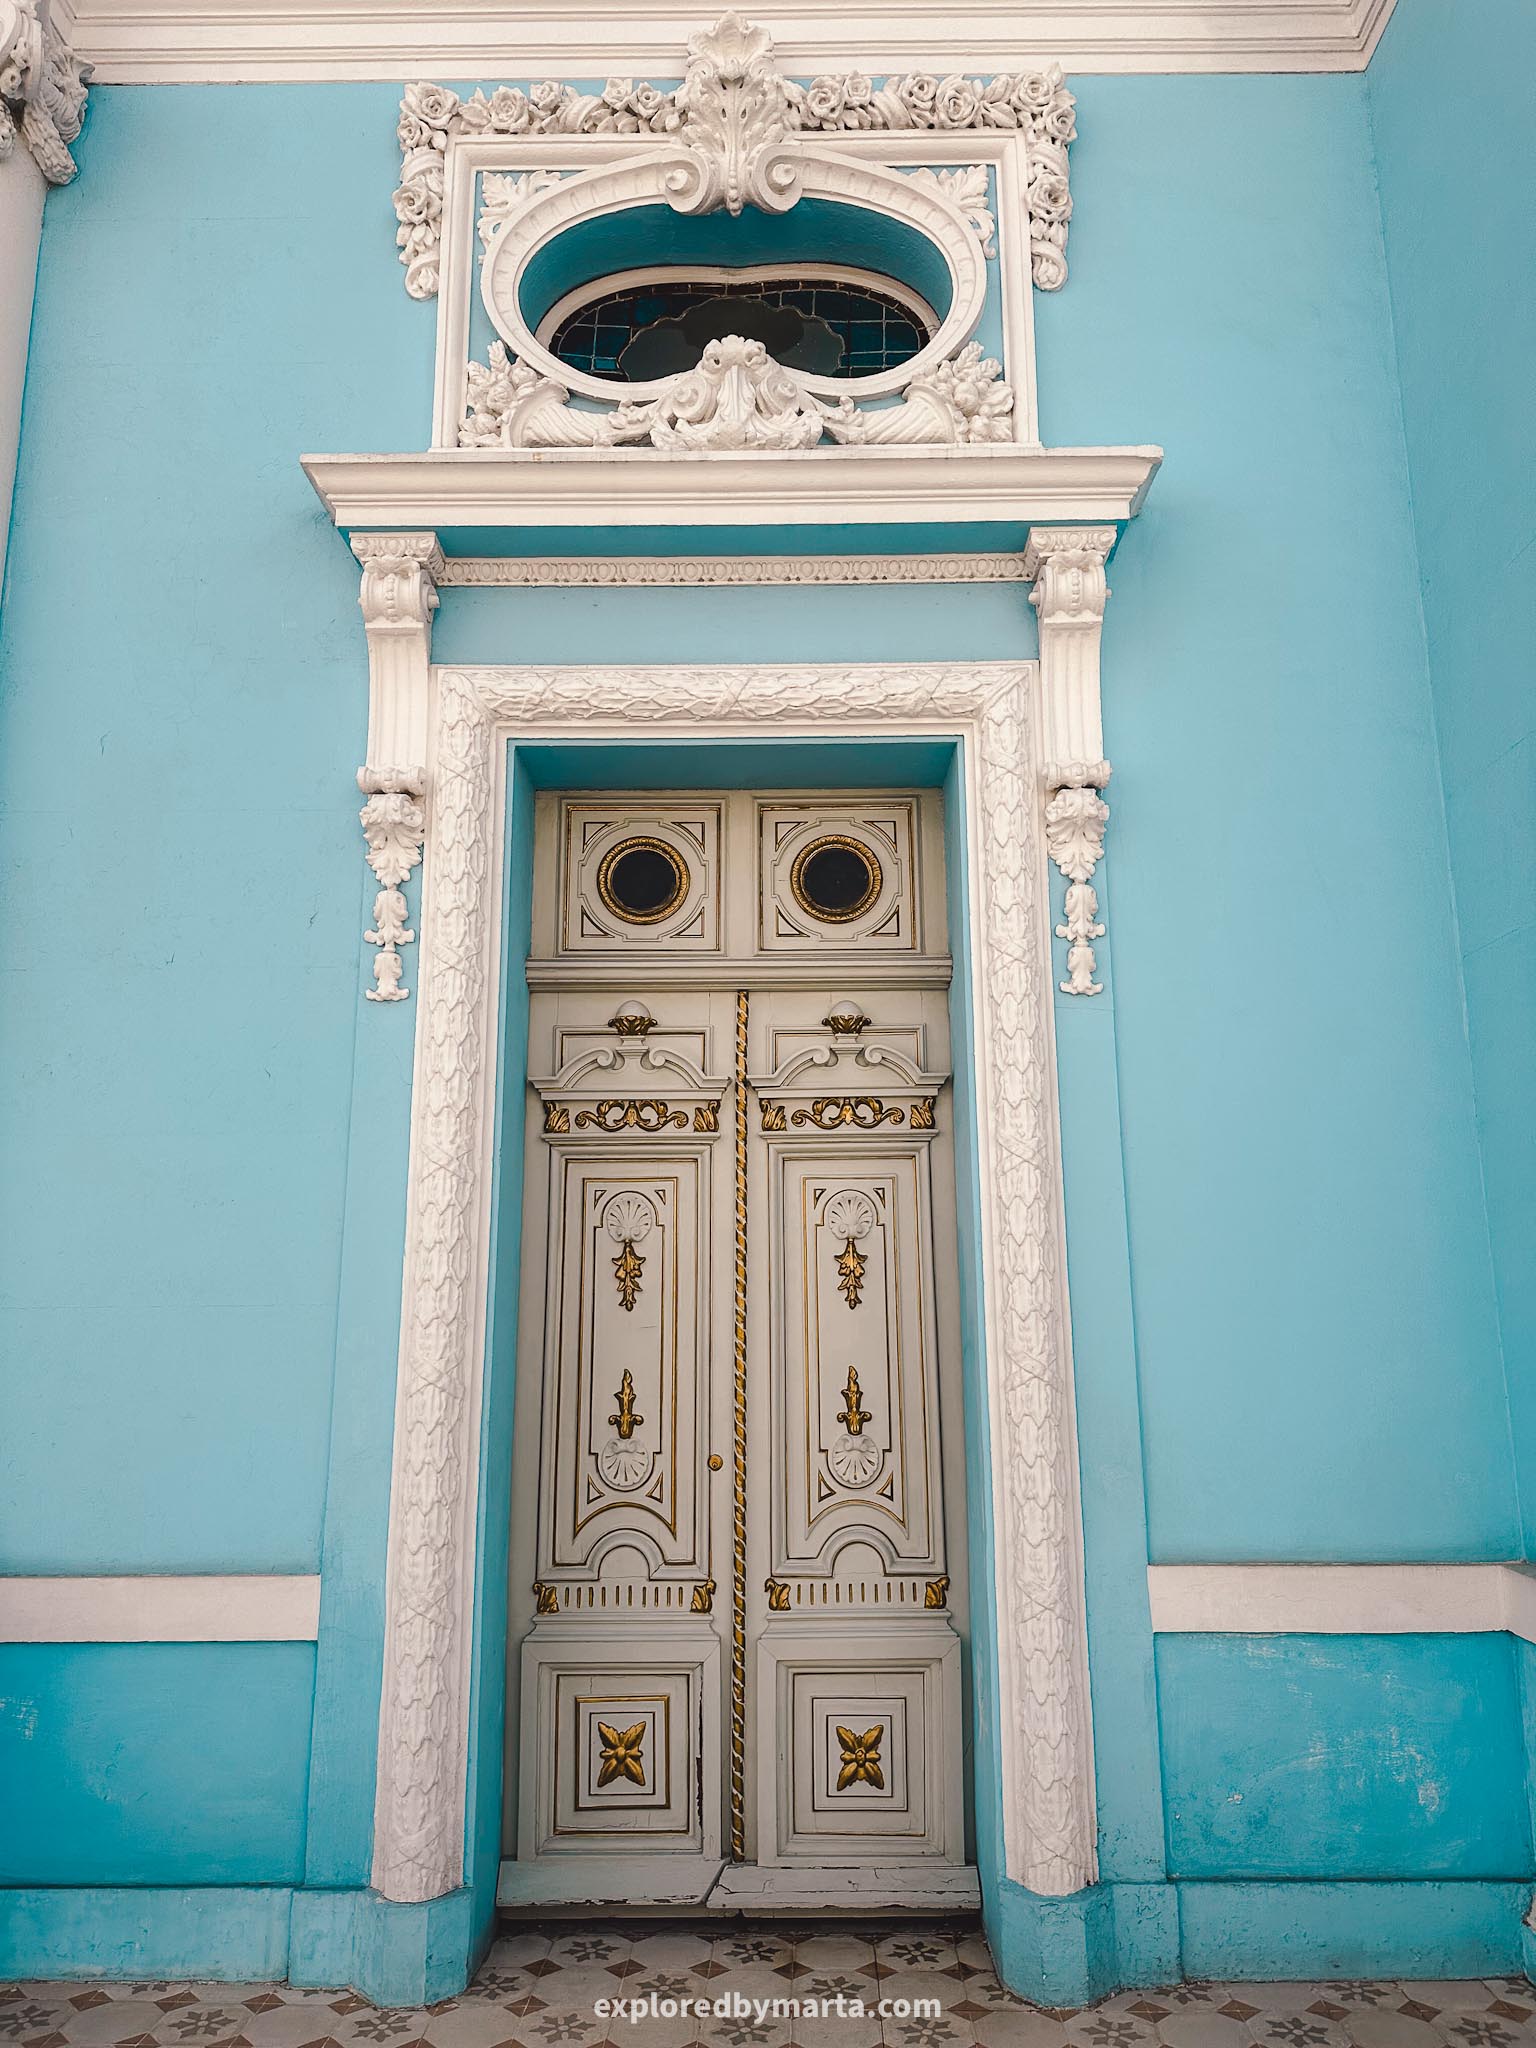 Merida, Mexico-Casa de la Cultura Jurídica - the most beautiful house in Merida painted in light blue color